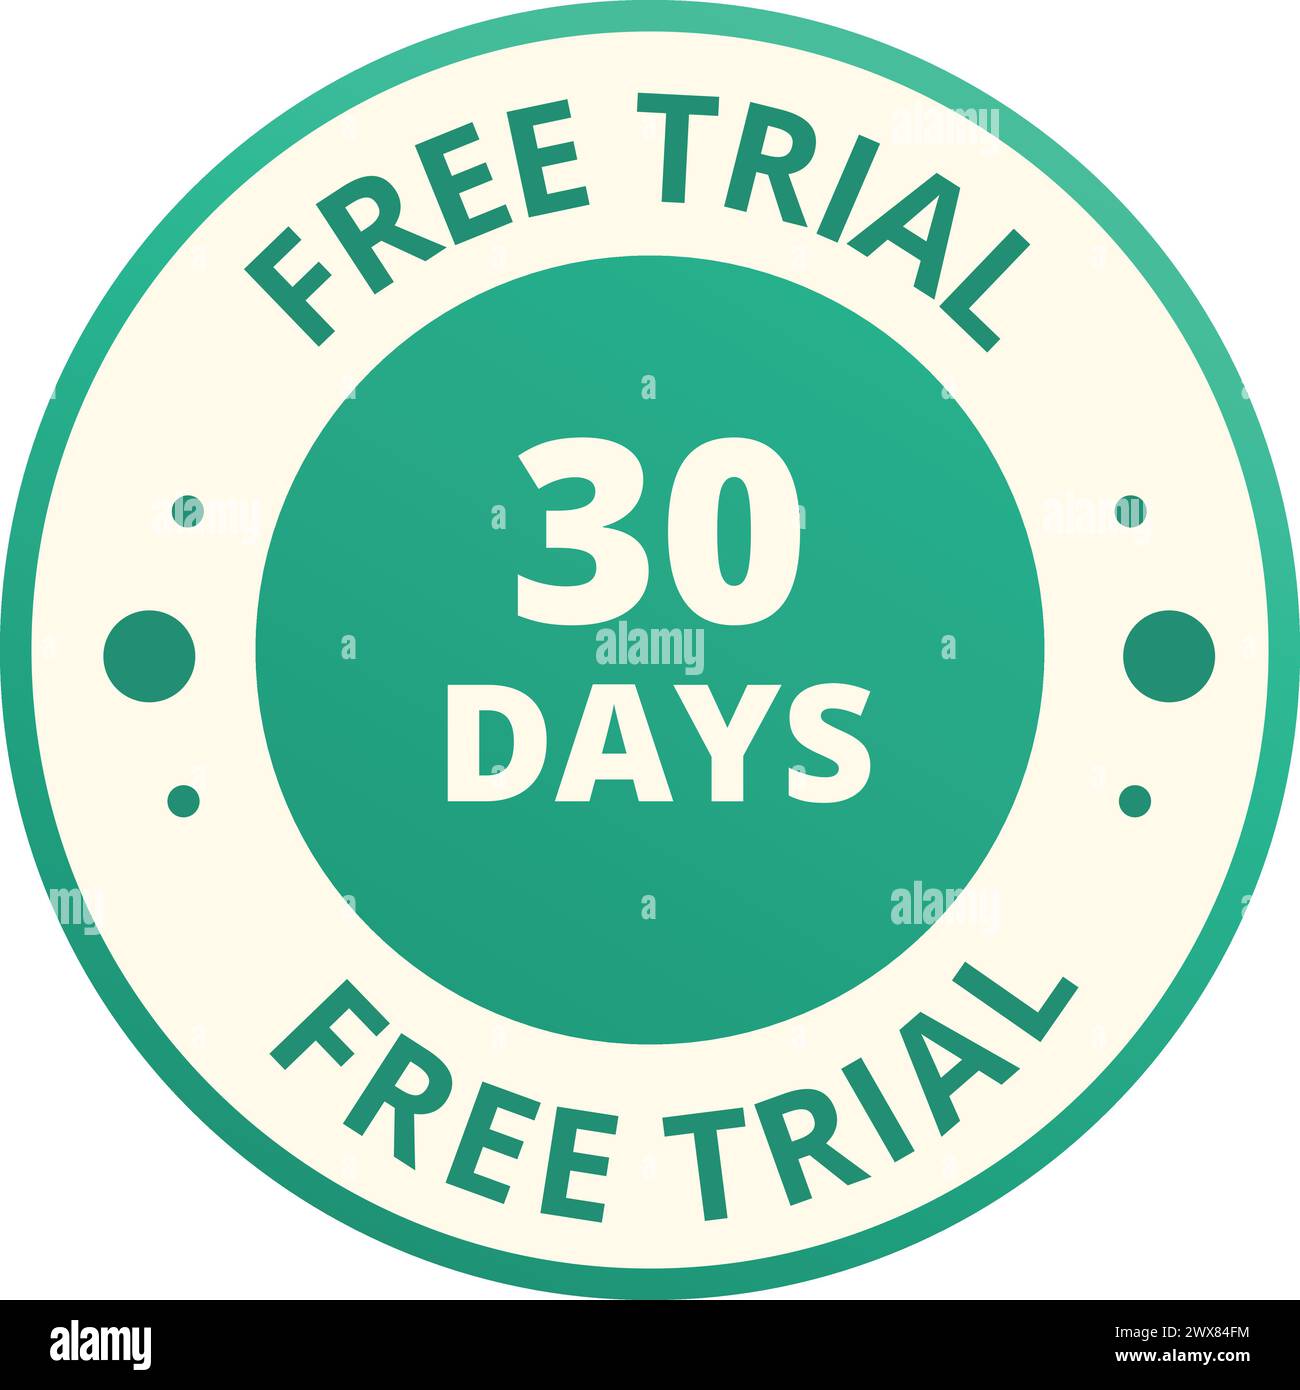 Free trial offer icon cartoon vector. Period active now. Gratis application Stock Vector